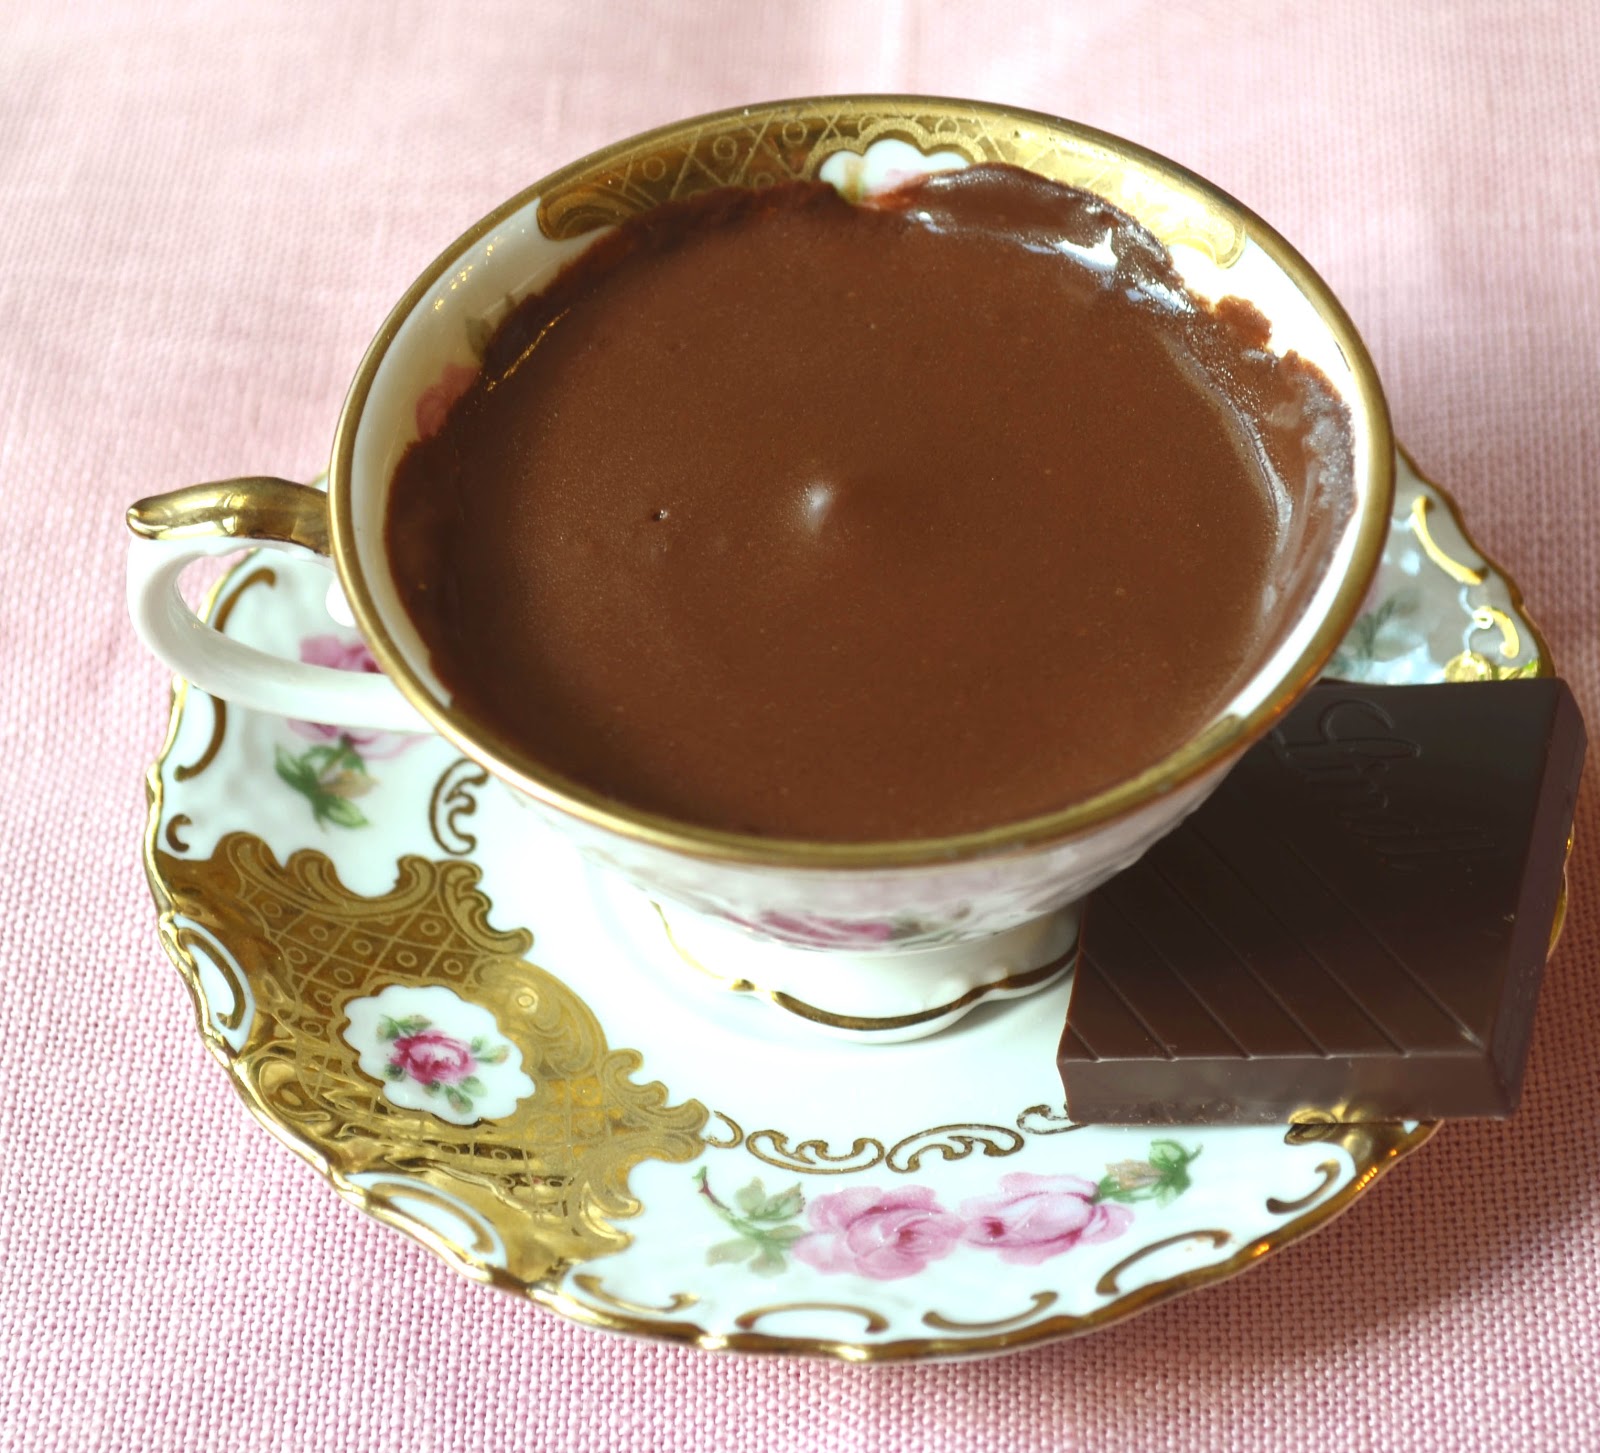 Горячий шоколад без шоколада. Французский горячий шоколад. Французский шоколад кофе. Французский шоколад. Темный горячий шоколад.